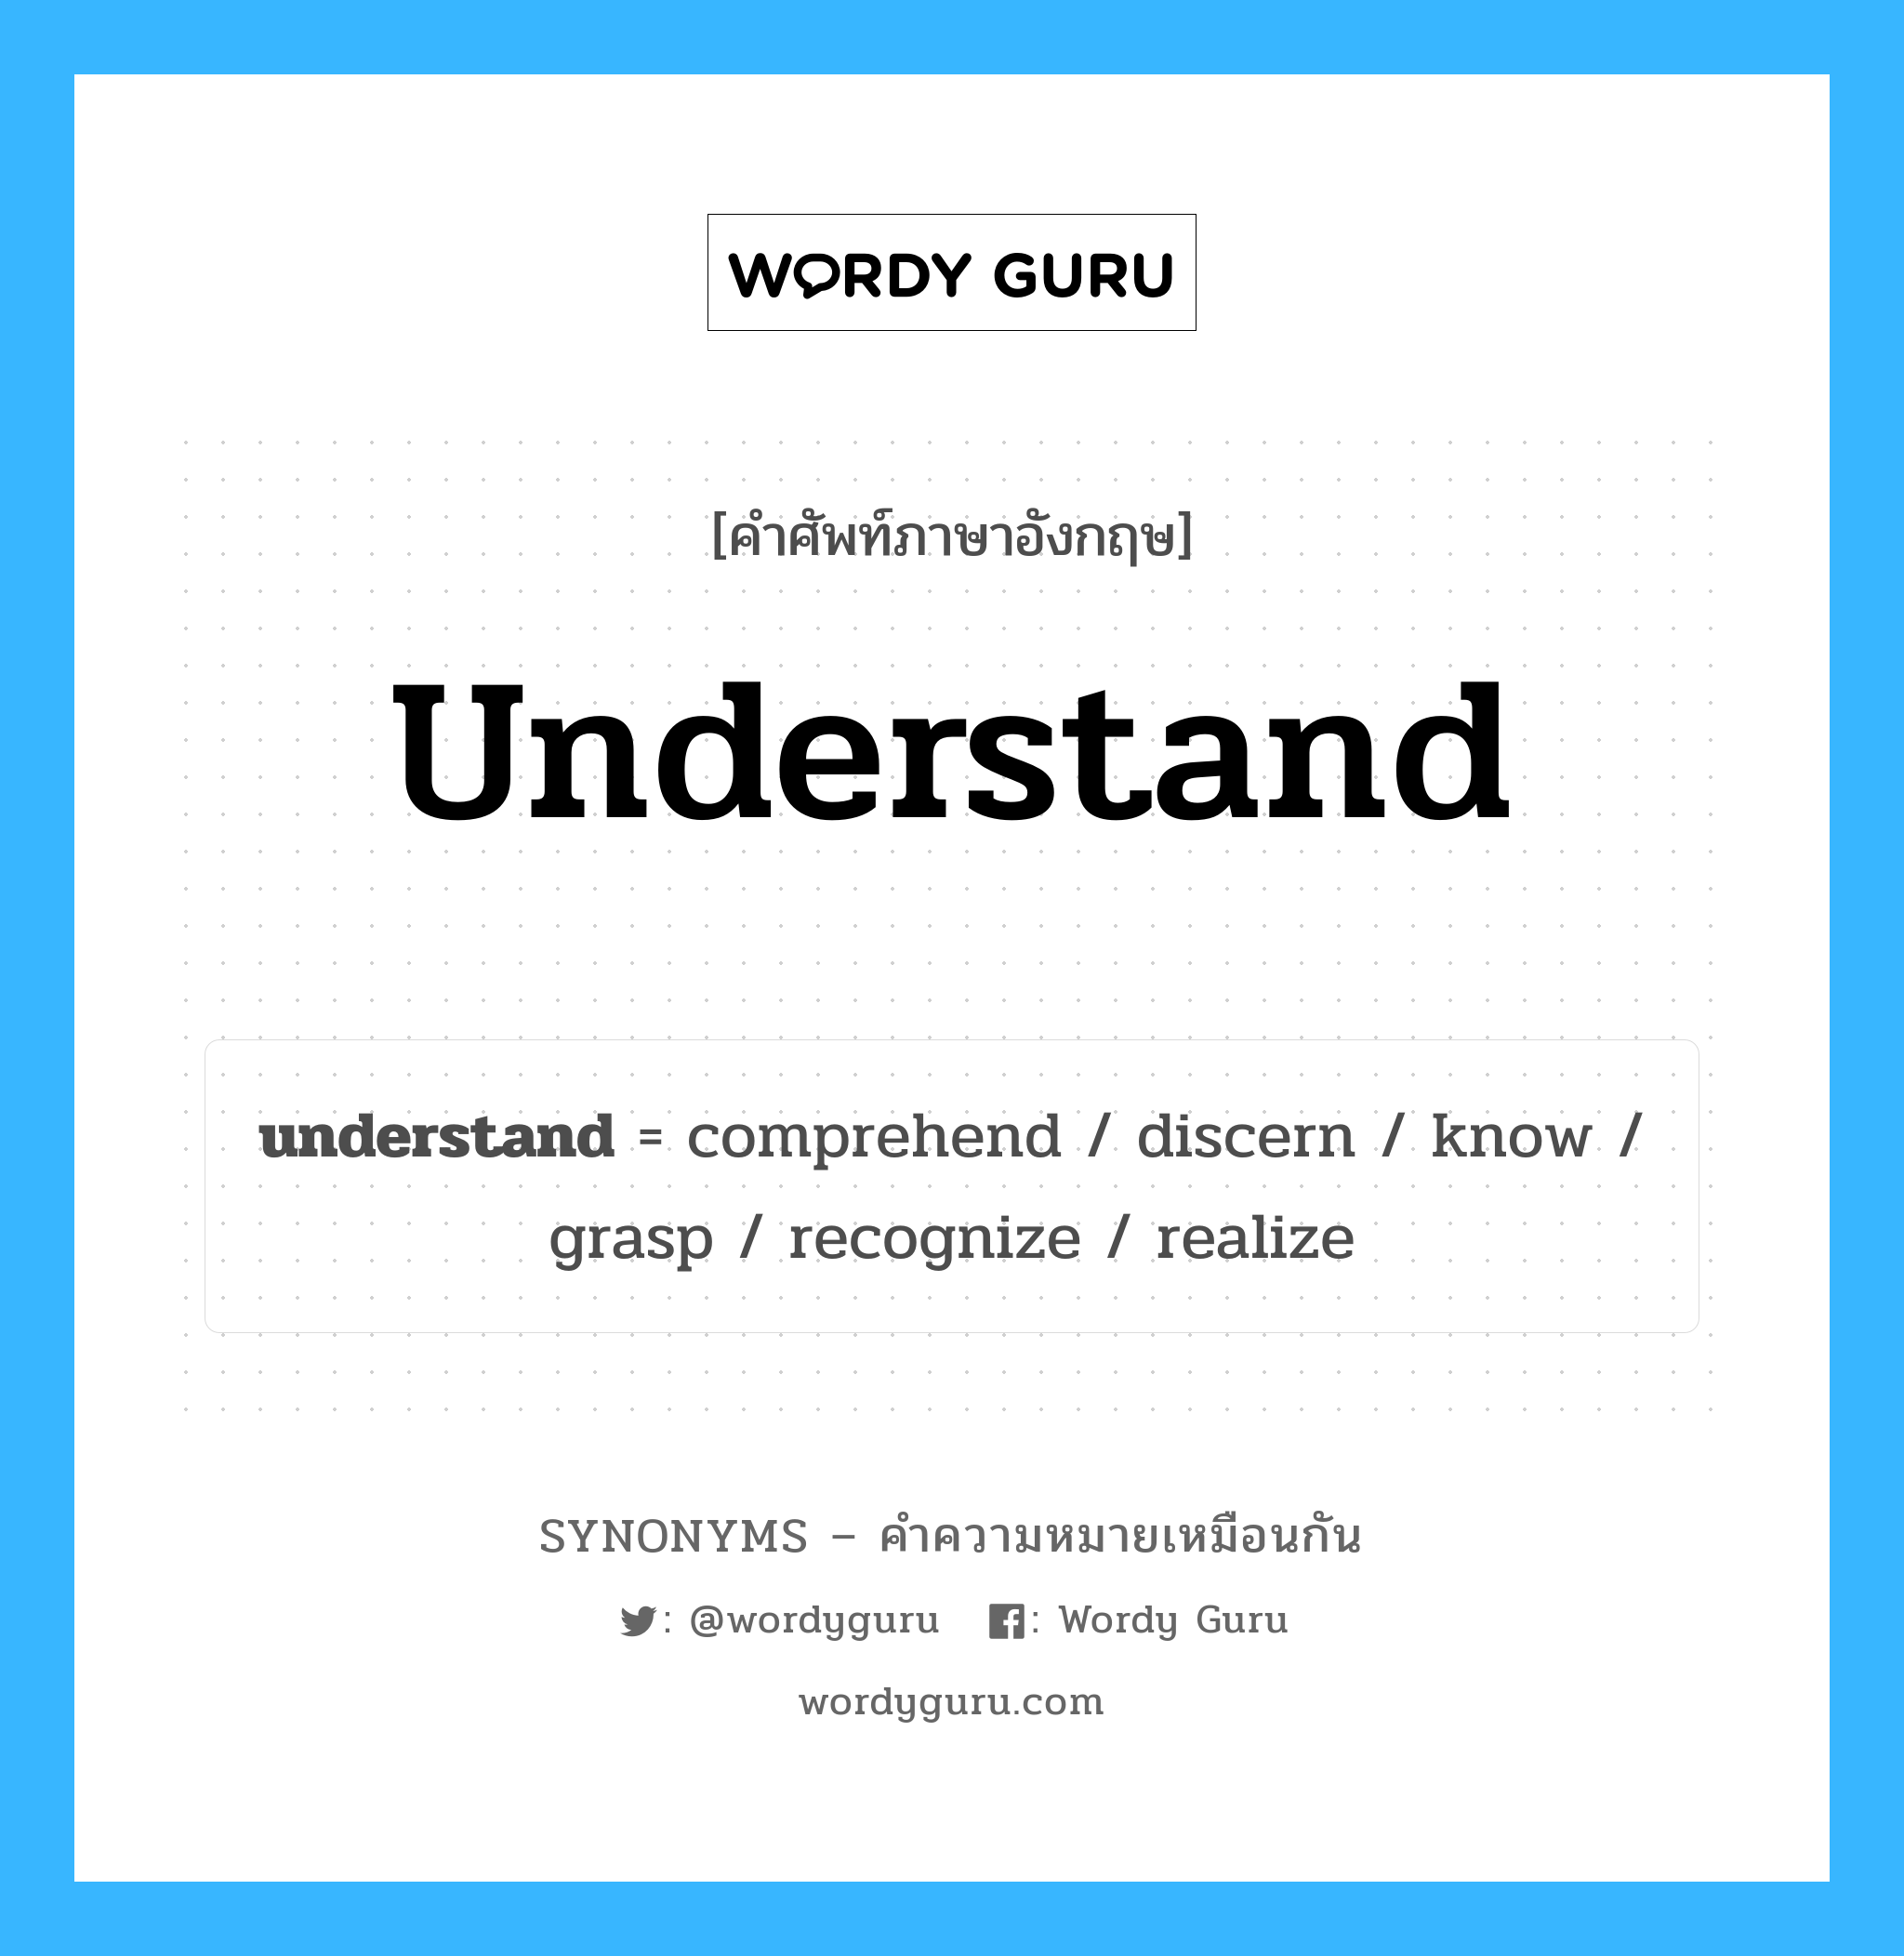 recognize เป็นหนึ่งใน understand และมีคำอื่น ๆ อีกดังนี้, คำศัพท์ภาษาอังกฤษ recognize ความหมายคล้ายกันกับ understand แปลว่า รู้จัก หมวด understand